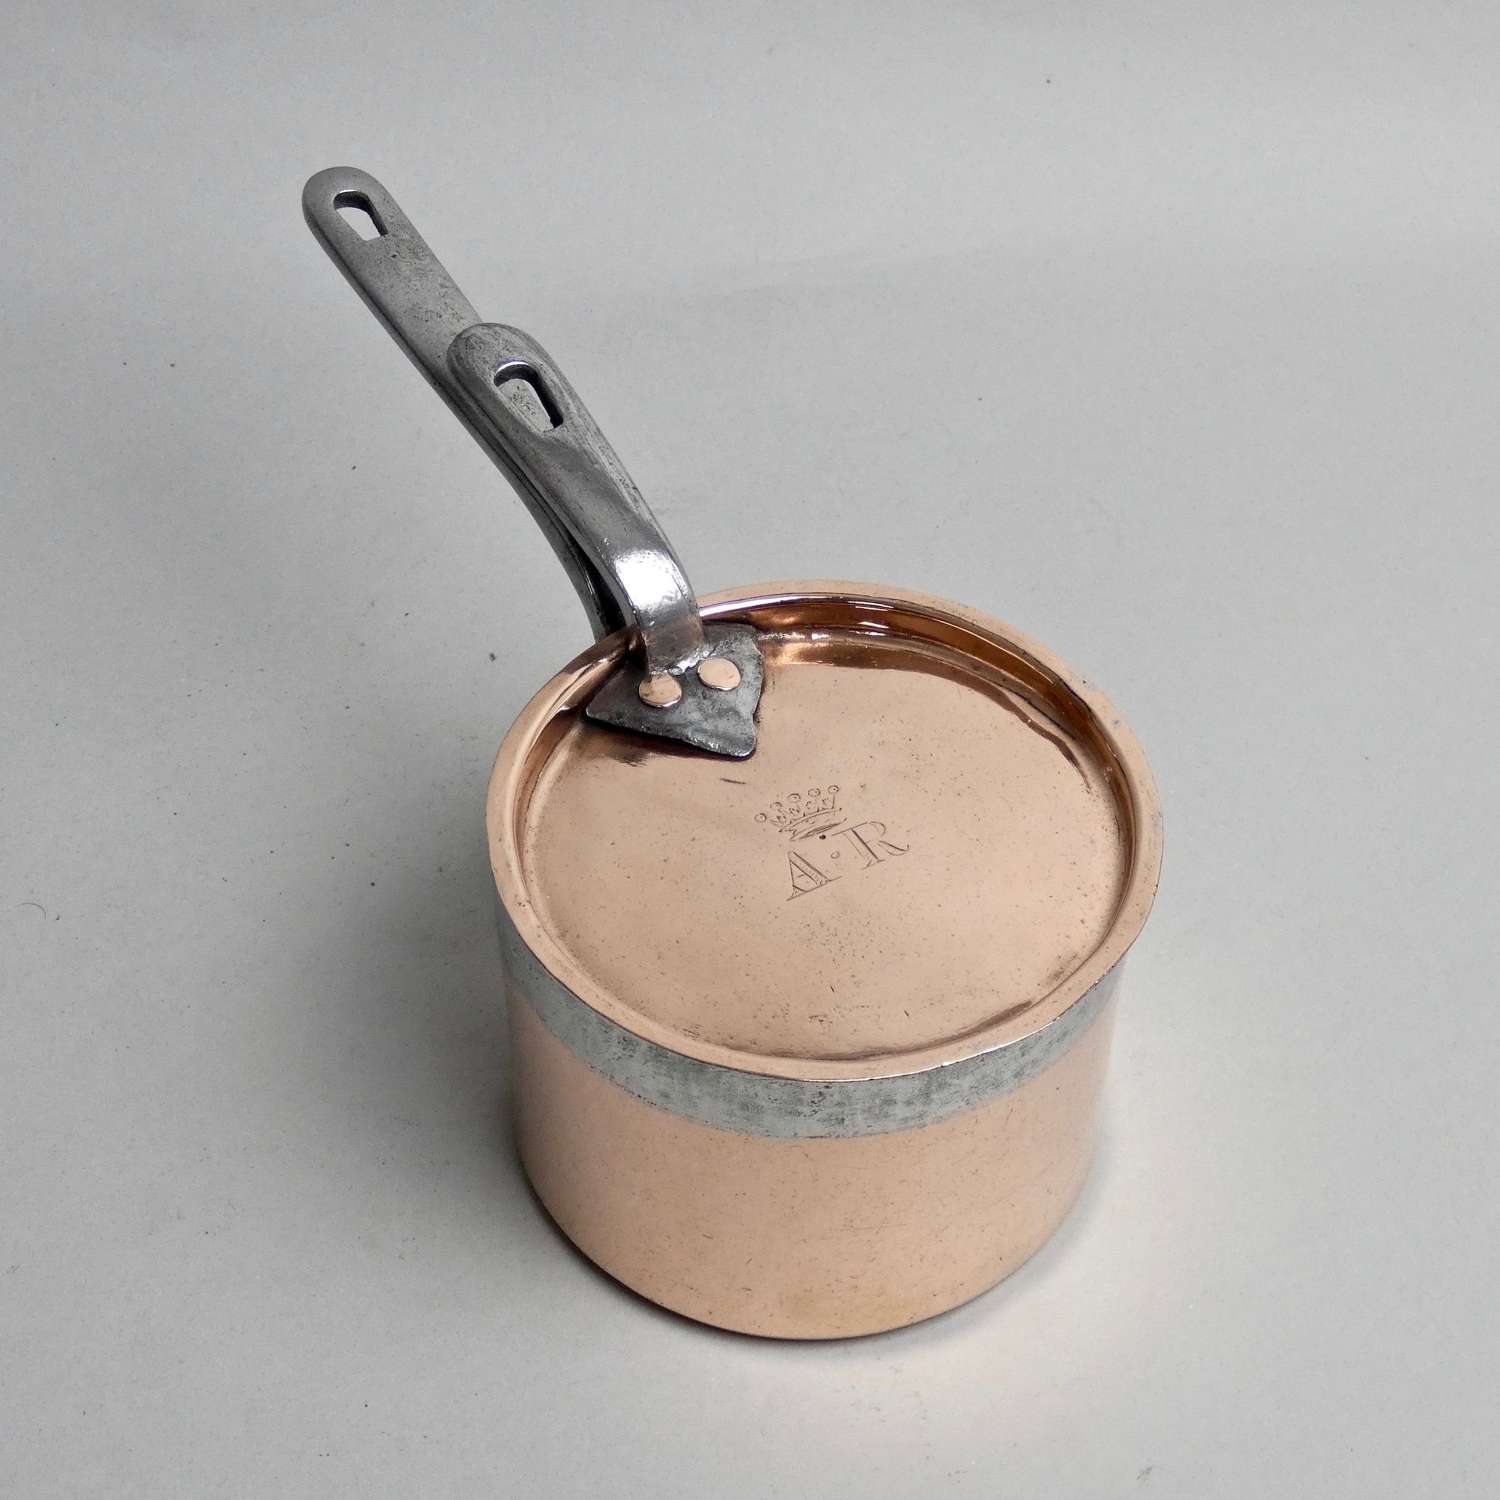 Small, engraved copper saucepan